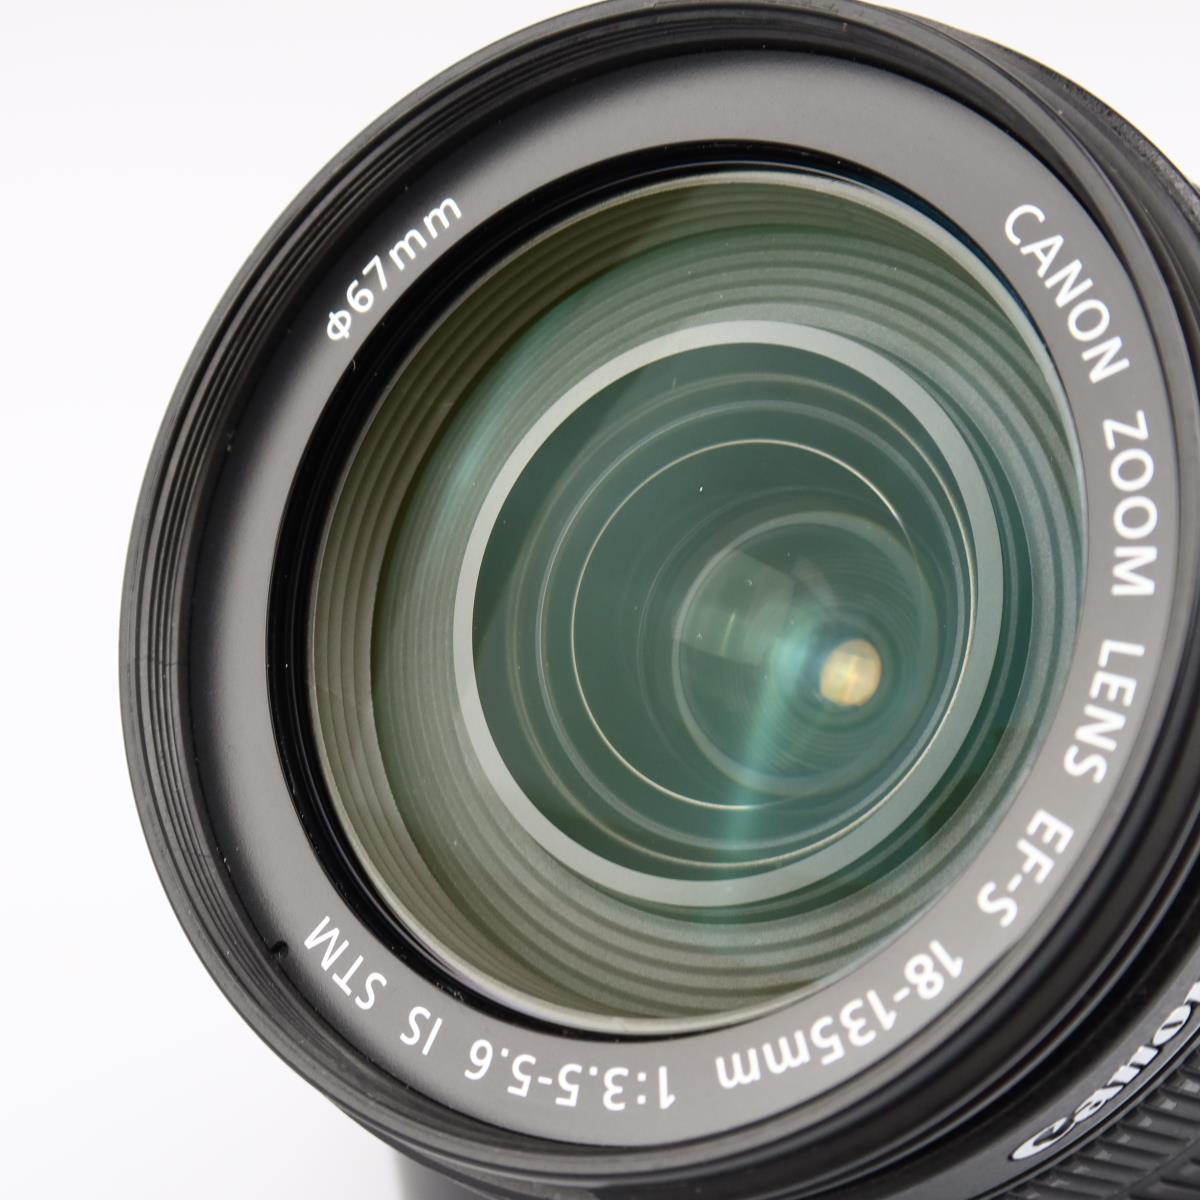 (Myyty) Canon EF-S 18-135mm f/3.5-5.6 IS STM zoom-objektiivi (käytetty)